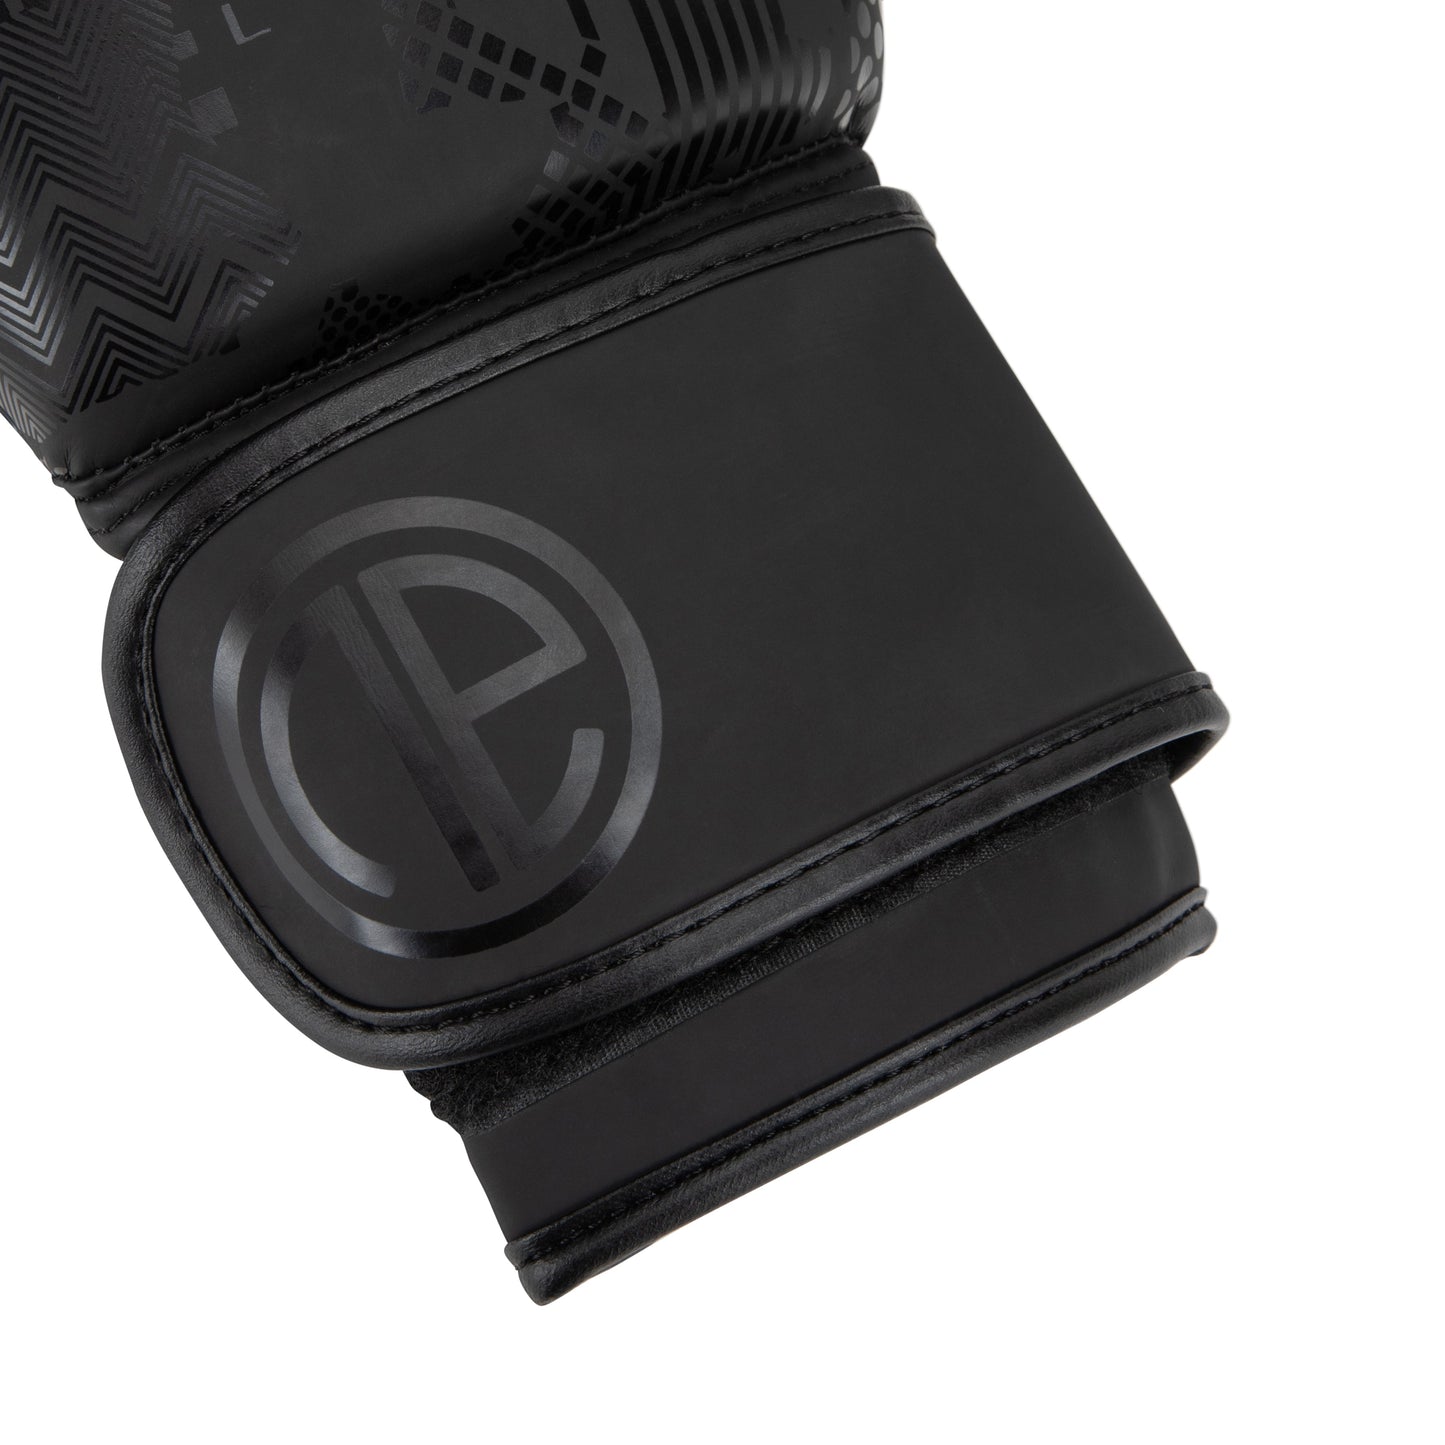 OA CHALLENGER Mk I Training Glove - Strap - Black/Black